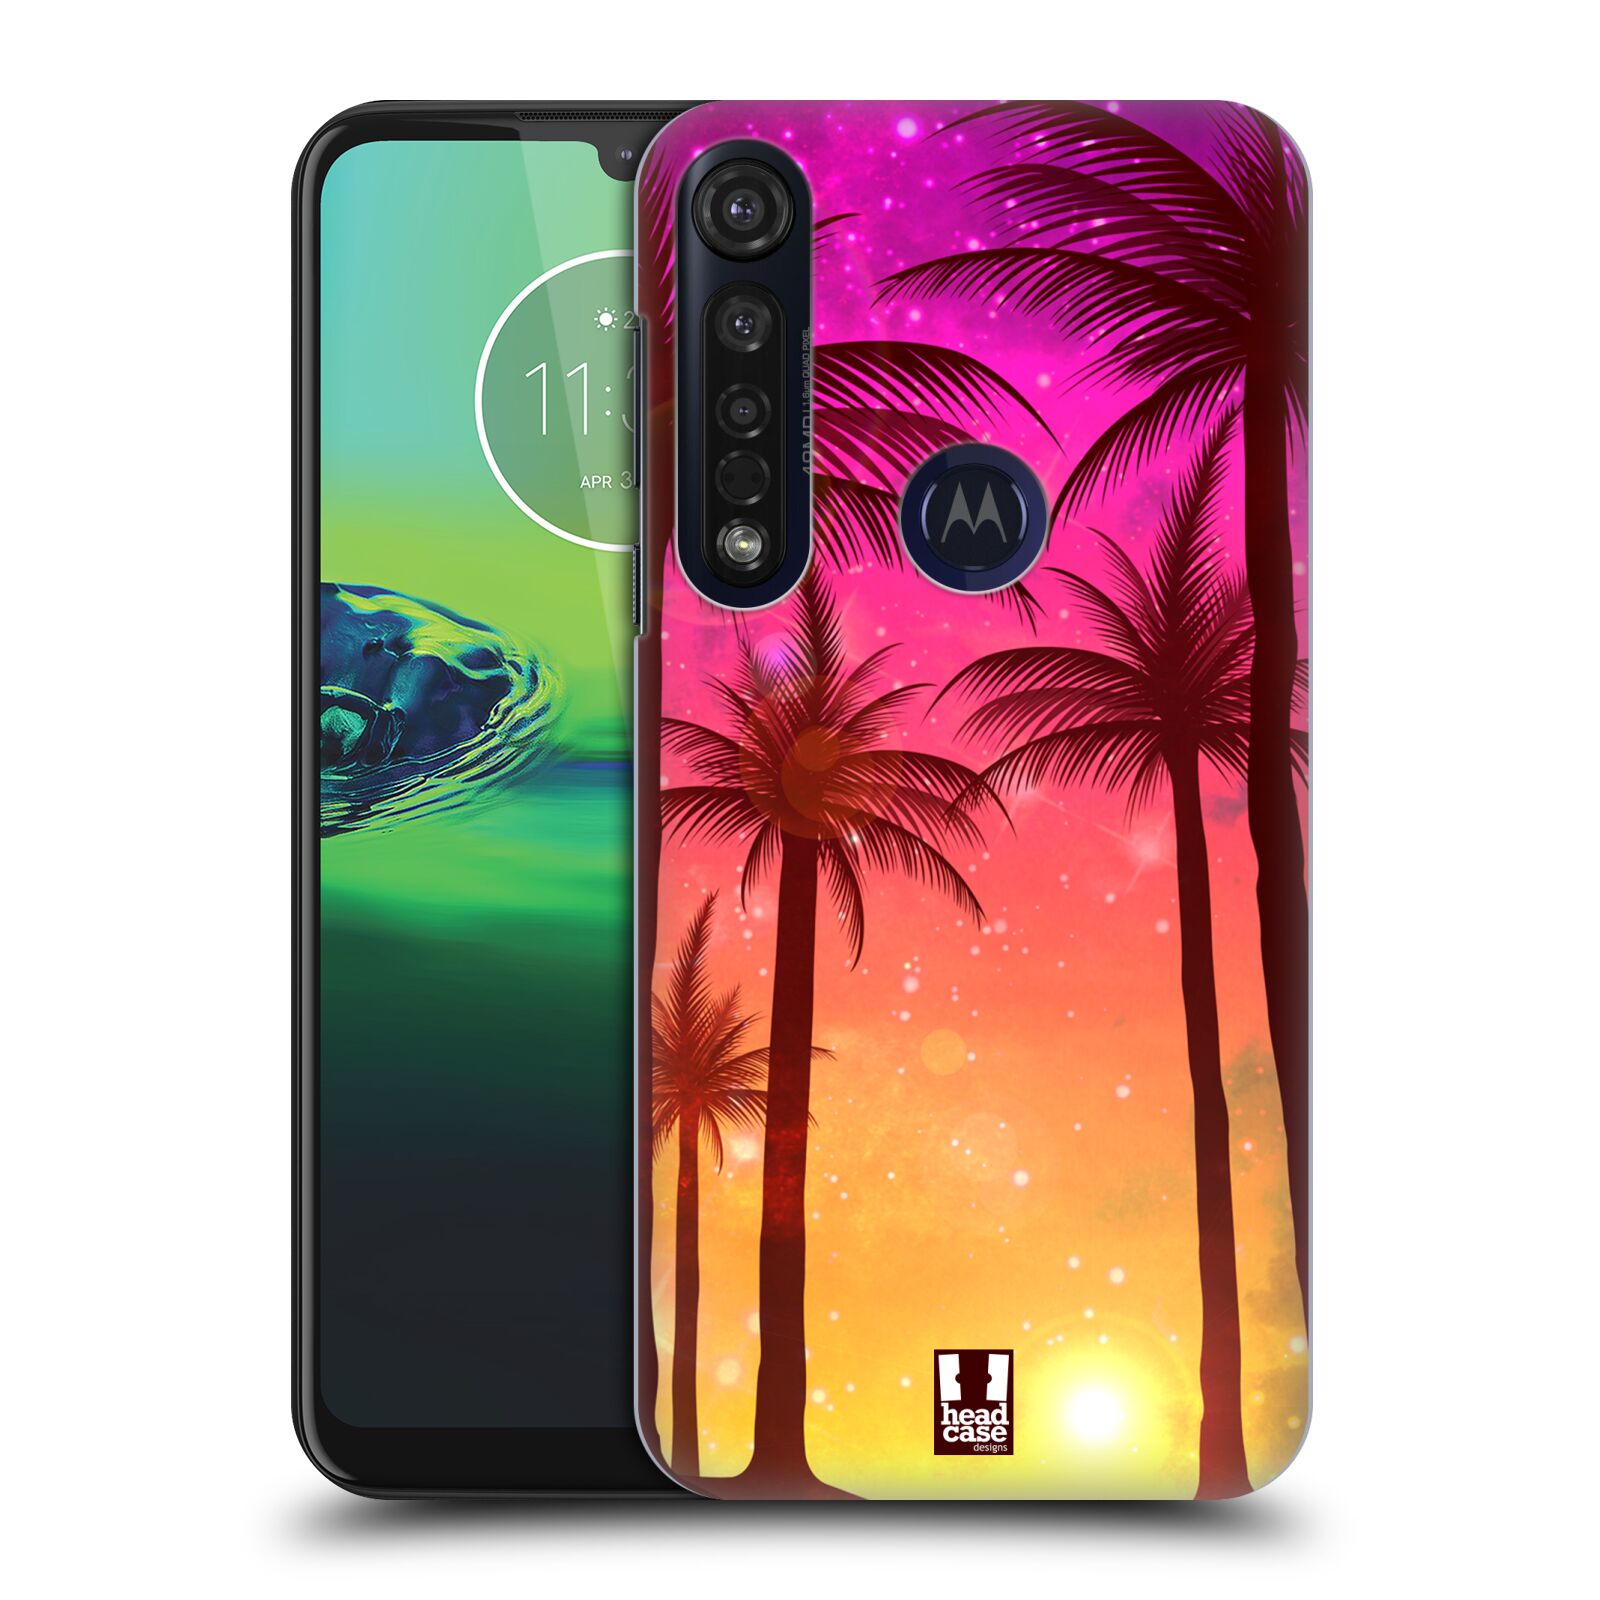 Pouzdro na mobil Motorola Moto G8 PLUS - HEAD CASE - vzor Kreslený motiv silueta moře a palmy RŮŽOVÁ